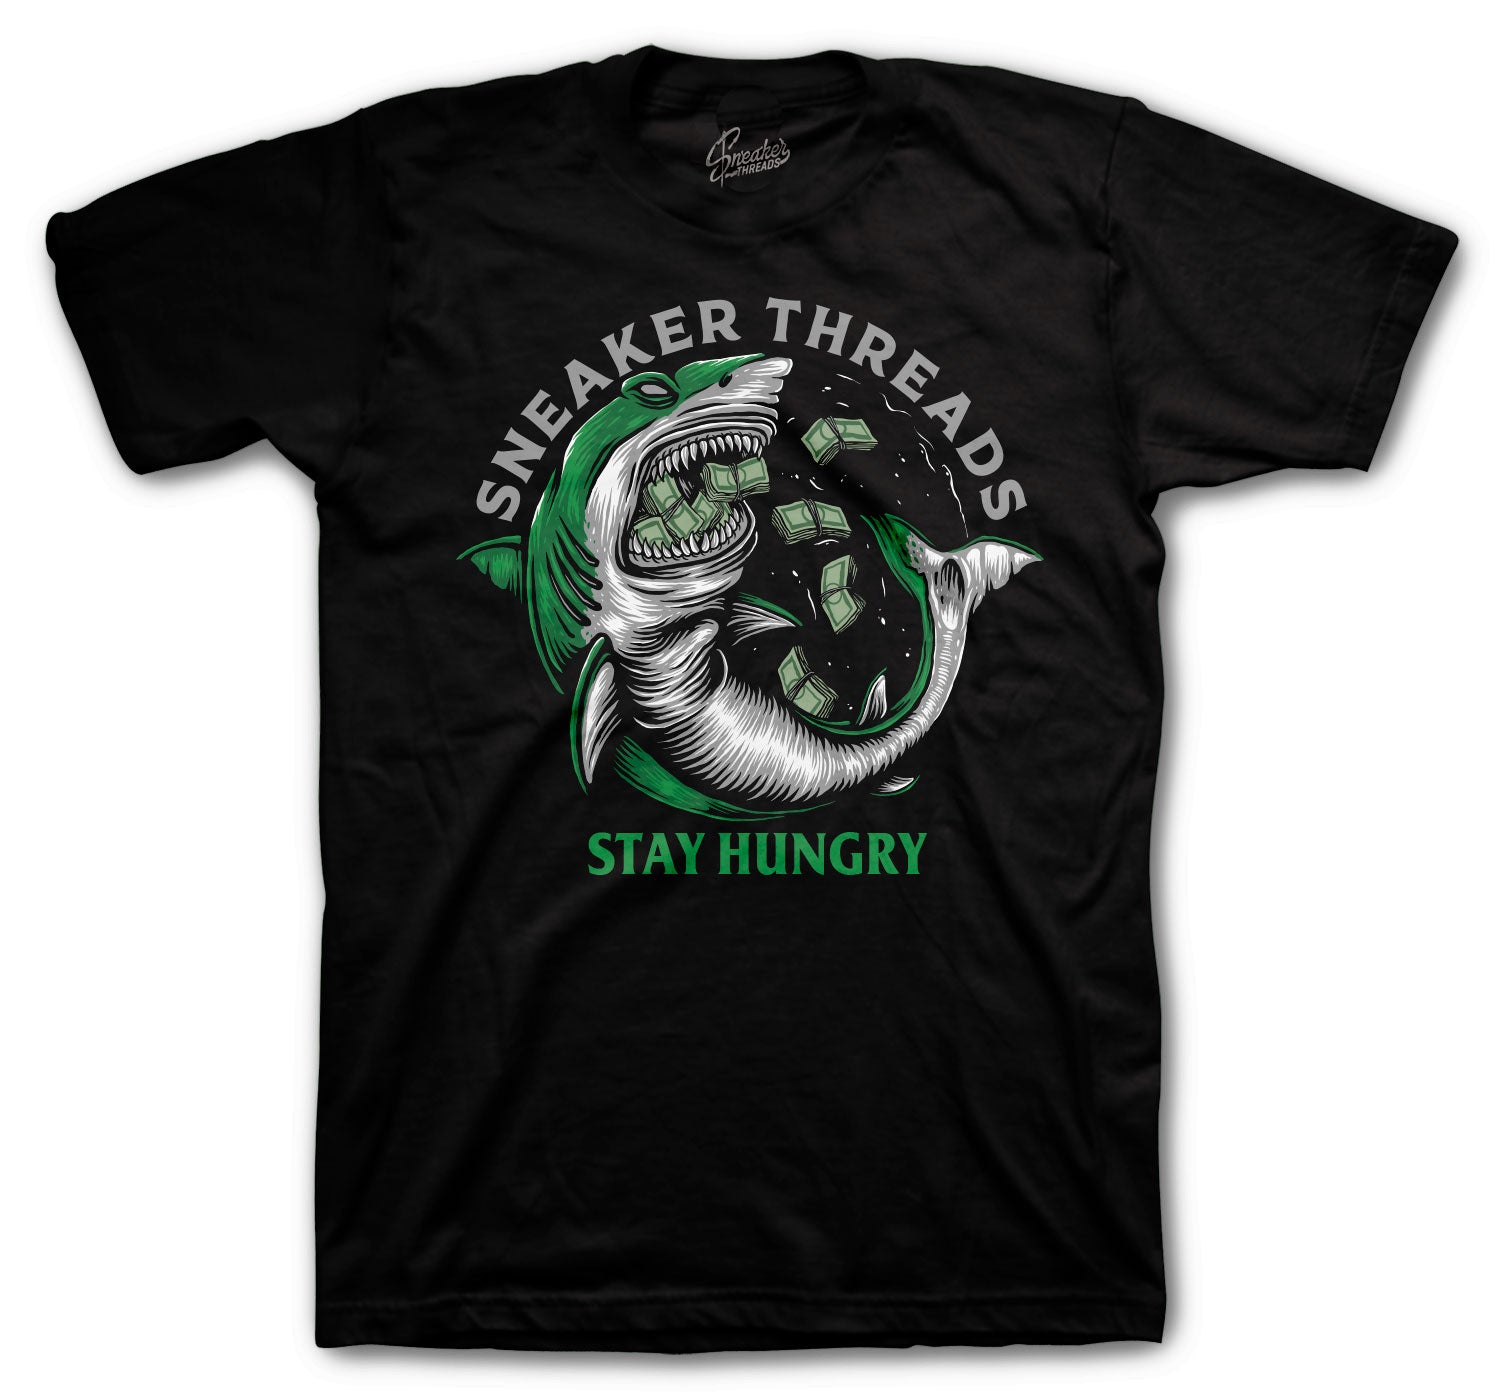 Retro 3 Pine Green Shirt - Stay Hungry - Black